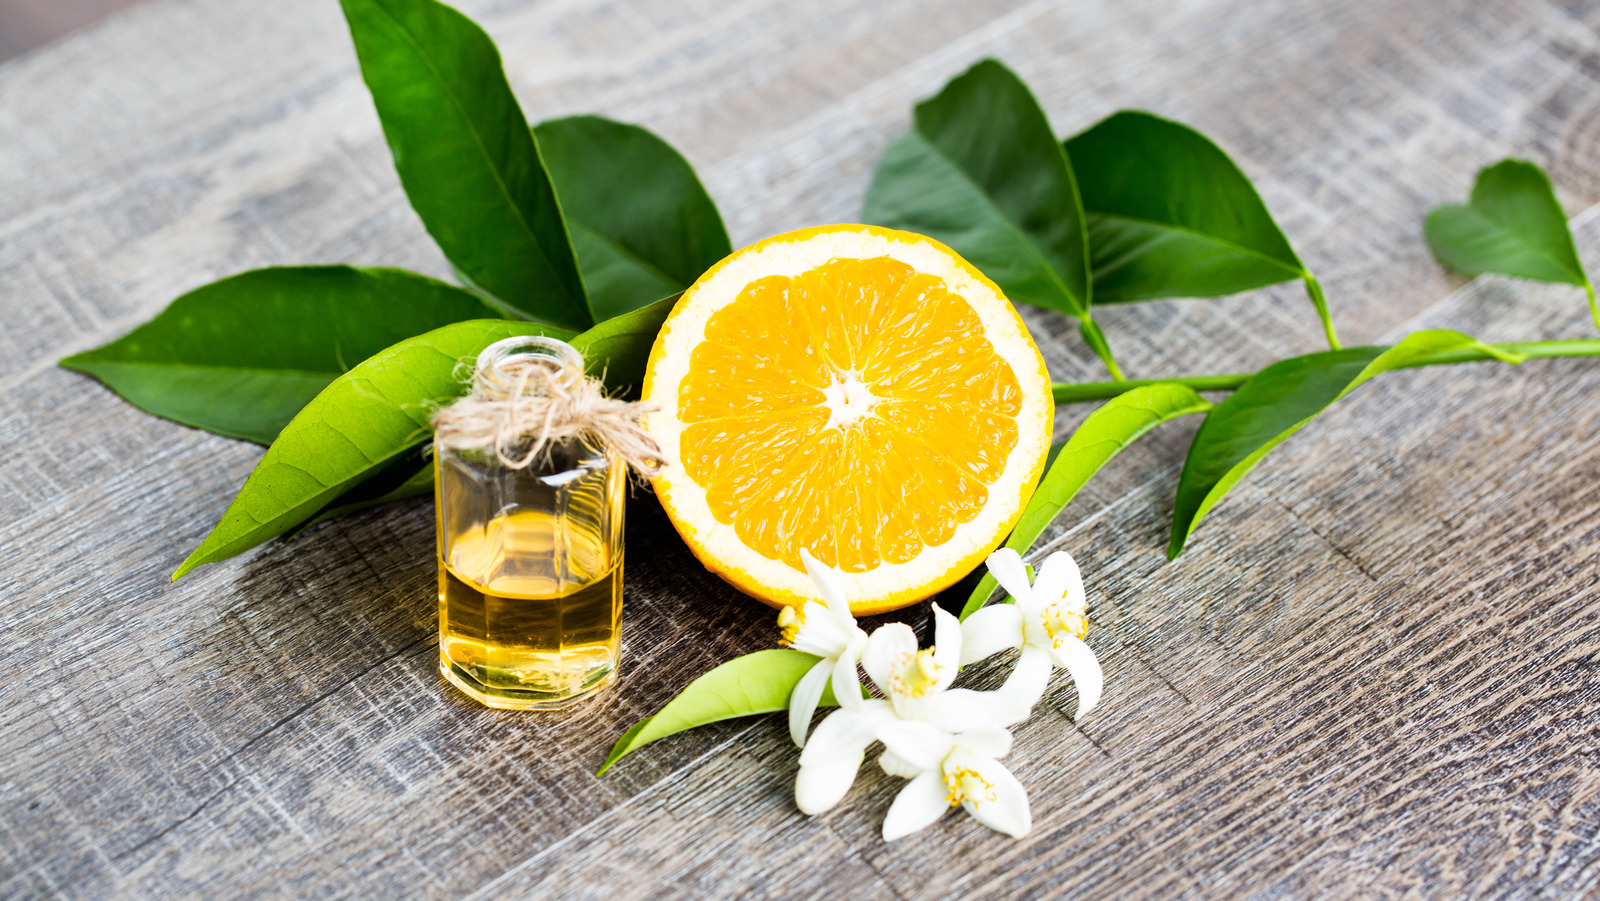 Neroli Orange Blossom Oil, Essential Oils